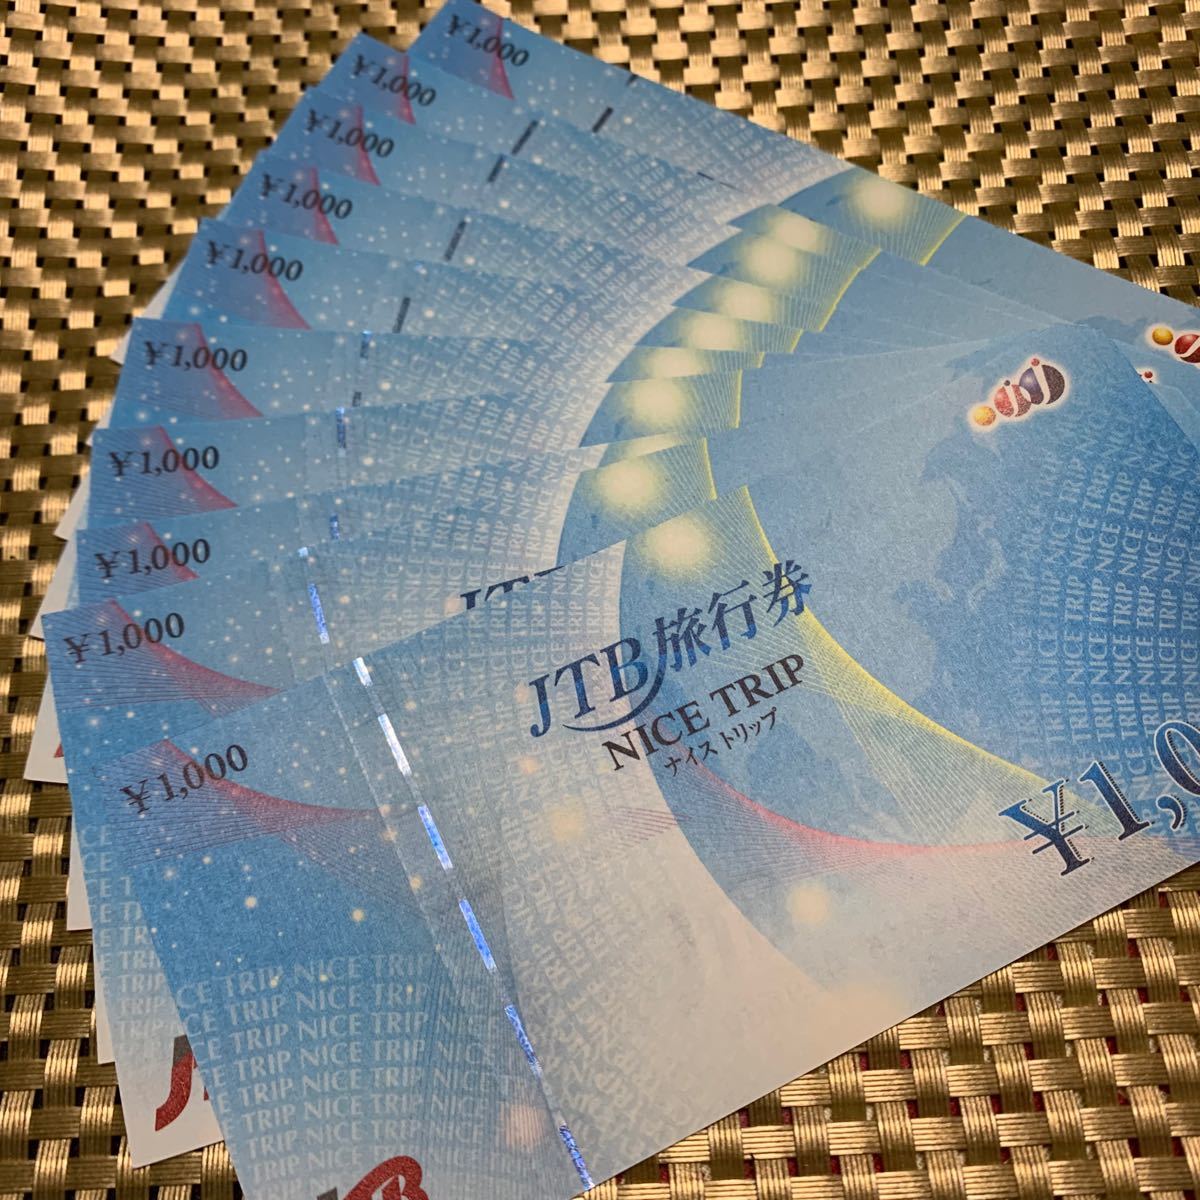 JTB旅行券 - チケット